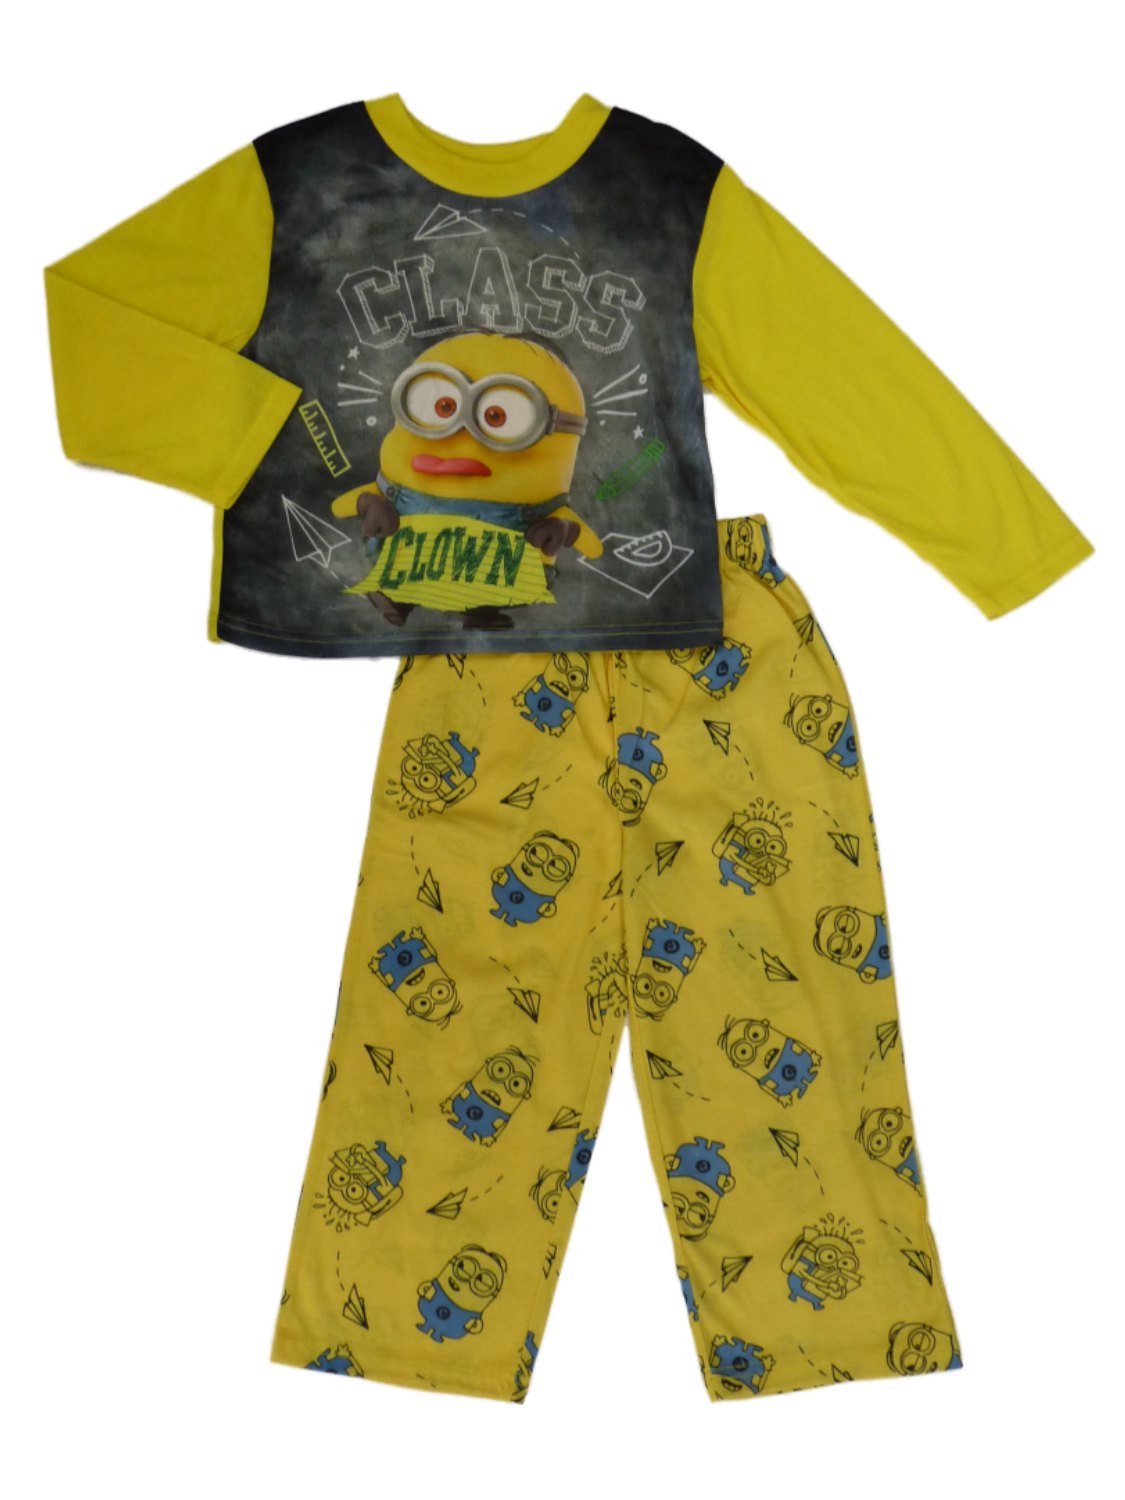 Illumination Entertainment Despicable Me Boys Minion Sleepwear Class Clown Pajama Set 4-5